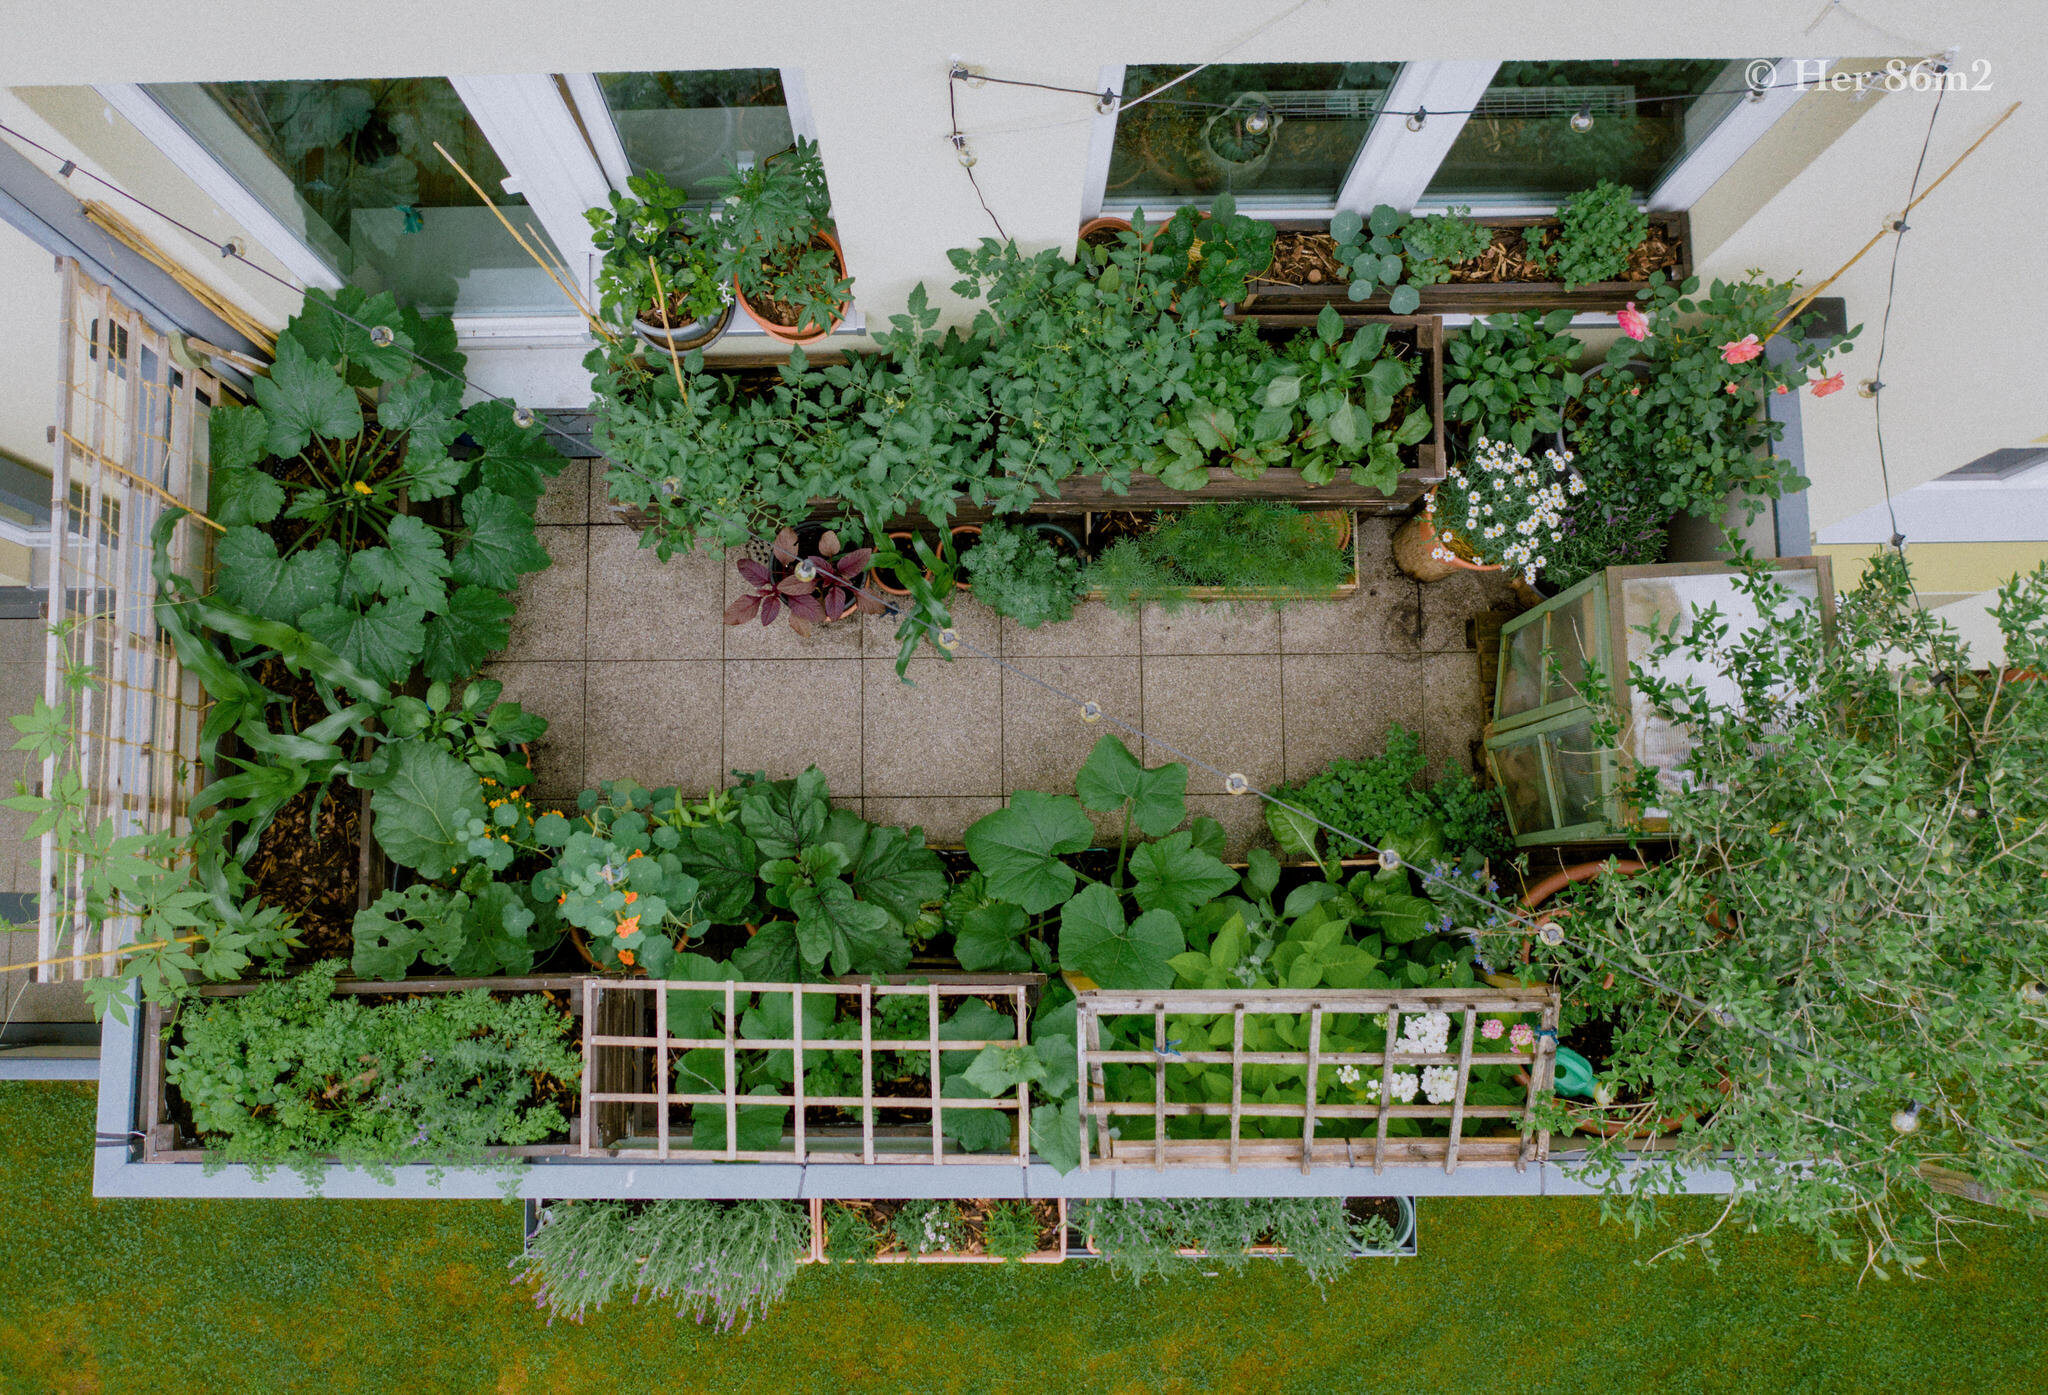 Her 86m2 - My 8m² Balcony Vegetable Garden | A Wonderful 200 Day Journey 172a.jpg